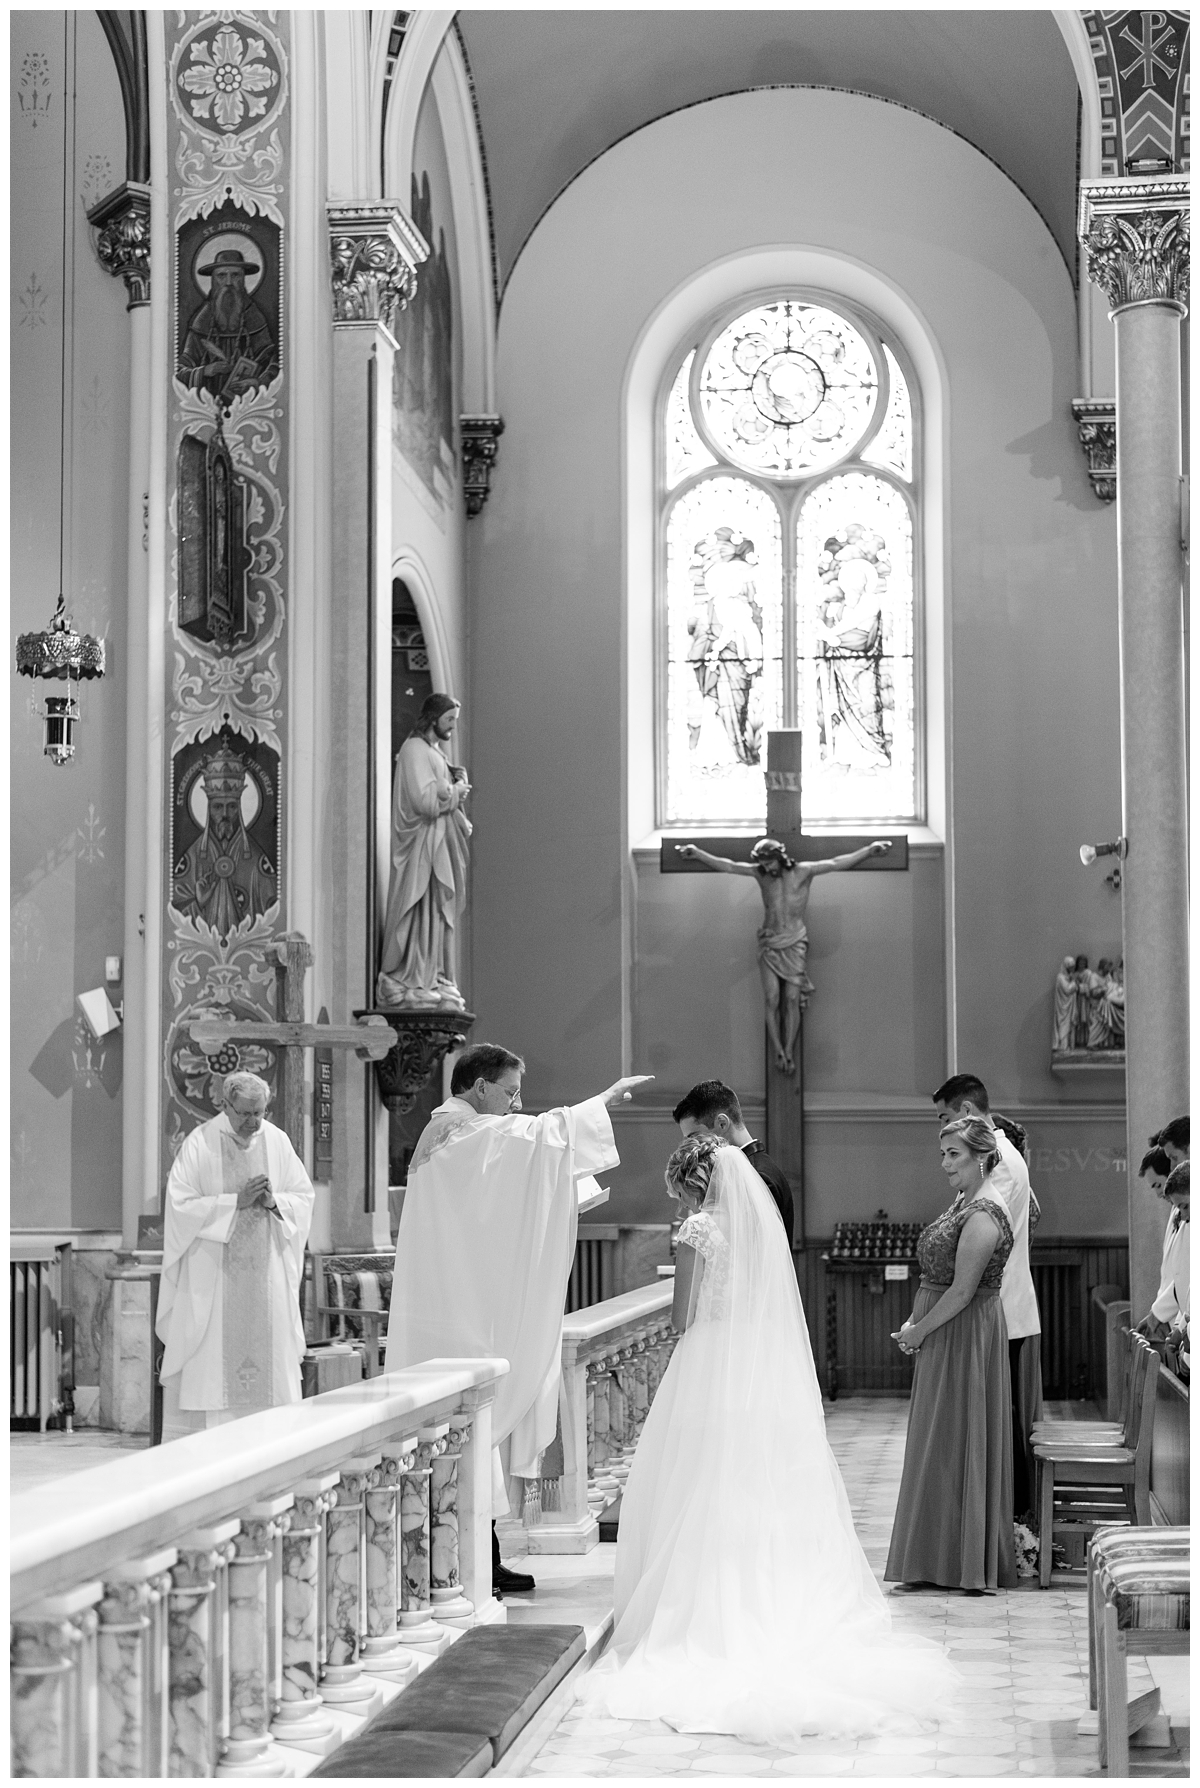 Wedding mass at St. Joseph Catholic Church